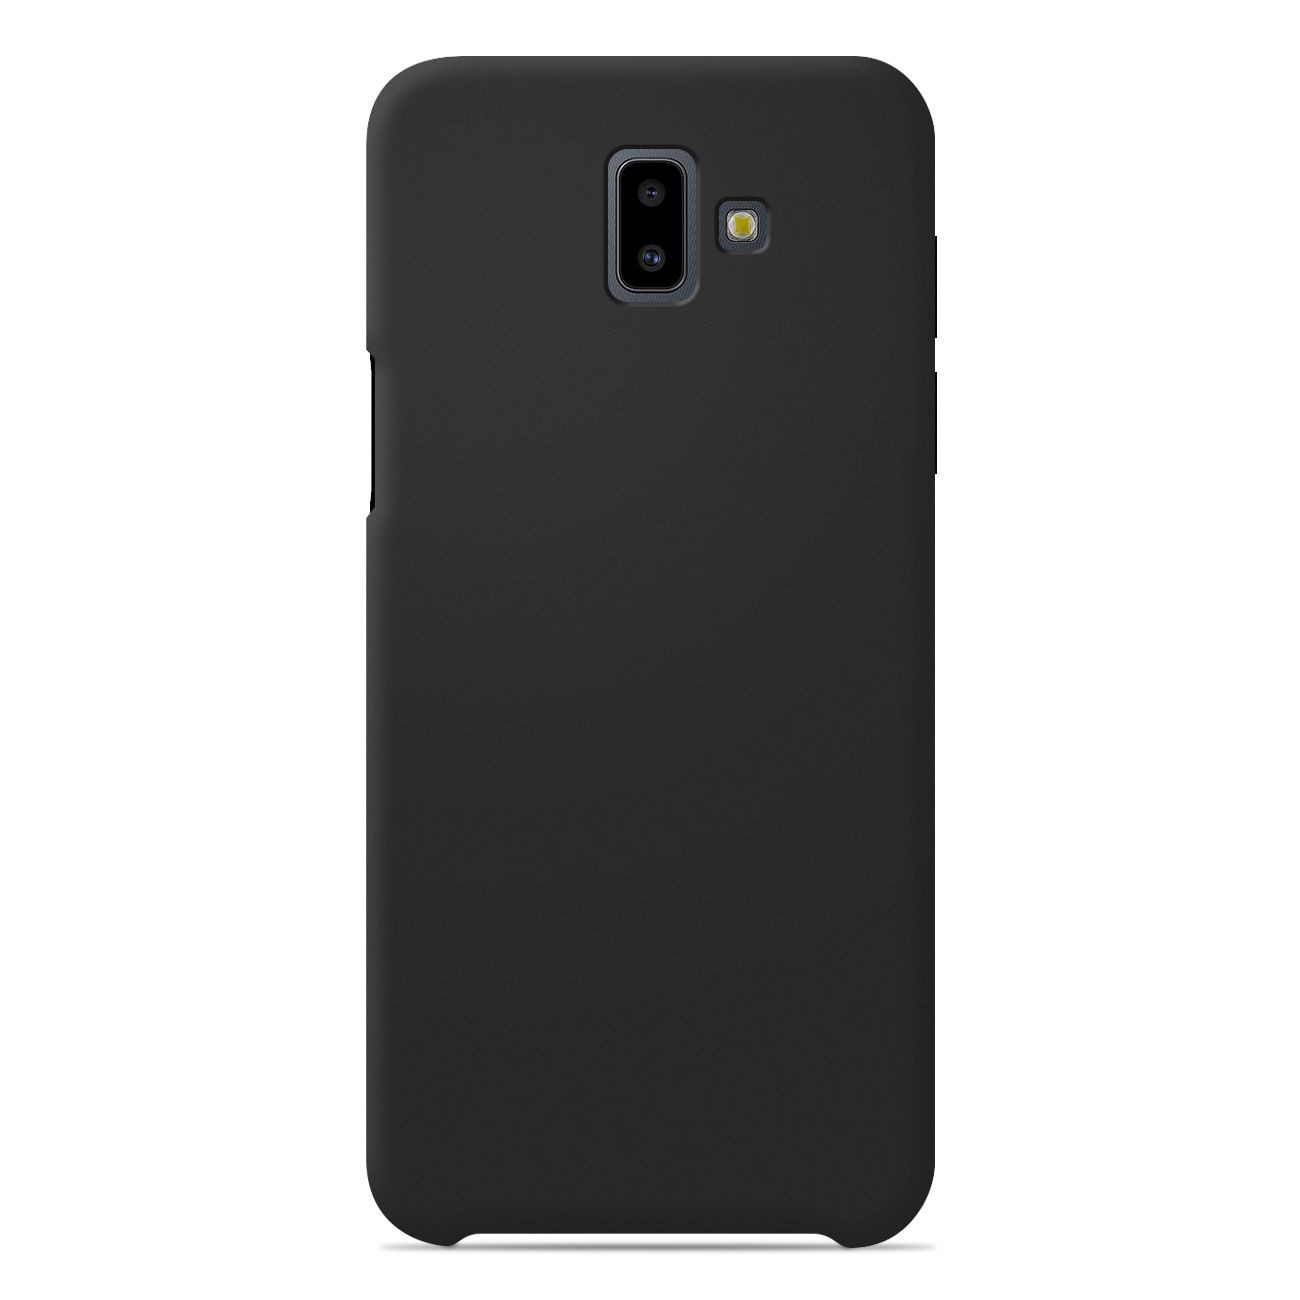 Coque silicone unie Soft Touch Noir compatible Samsung Galaxy J6 Plus 2018